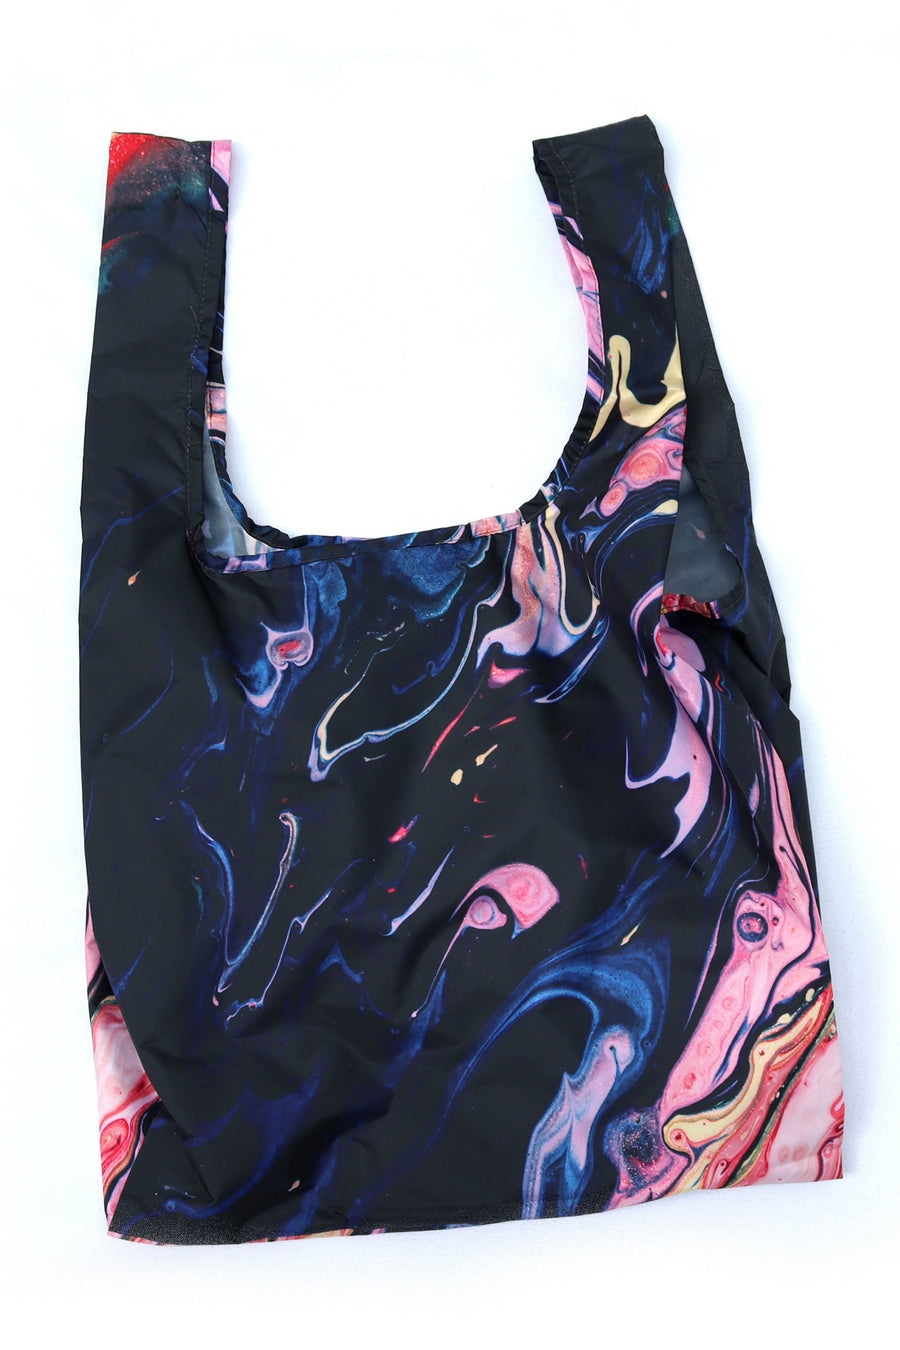 Kind Bag Galaxy Black Reusable Bag Flatlay 